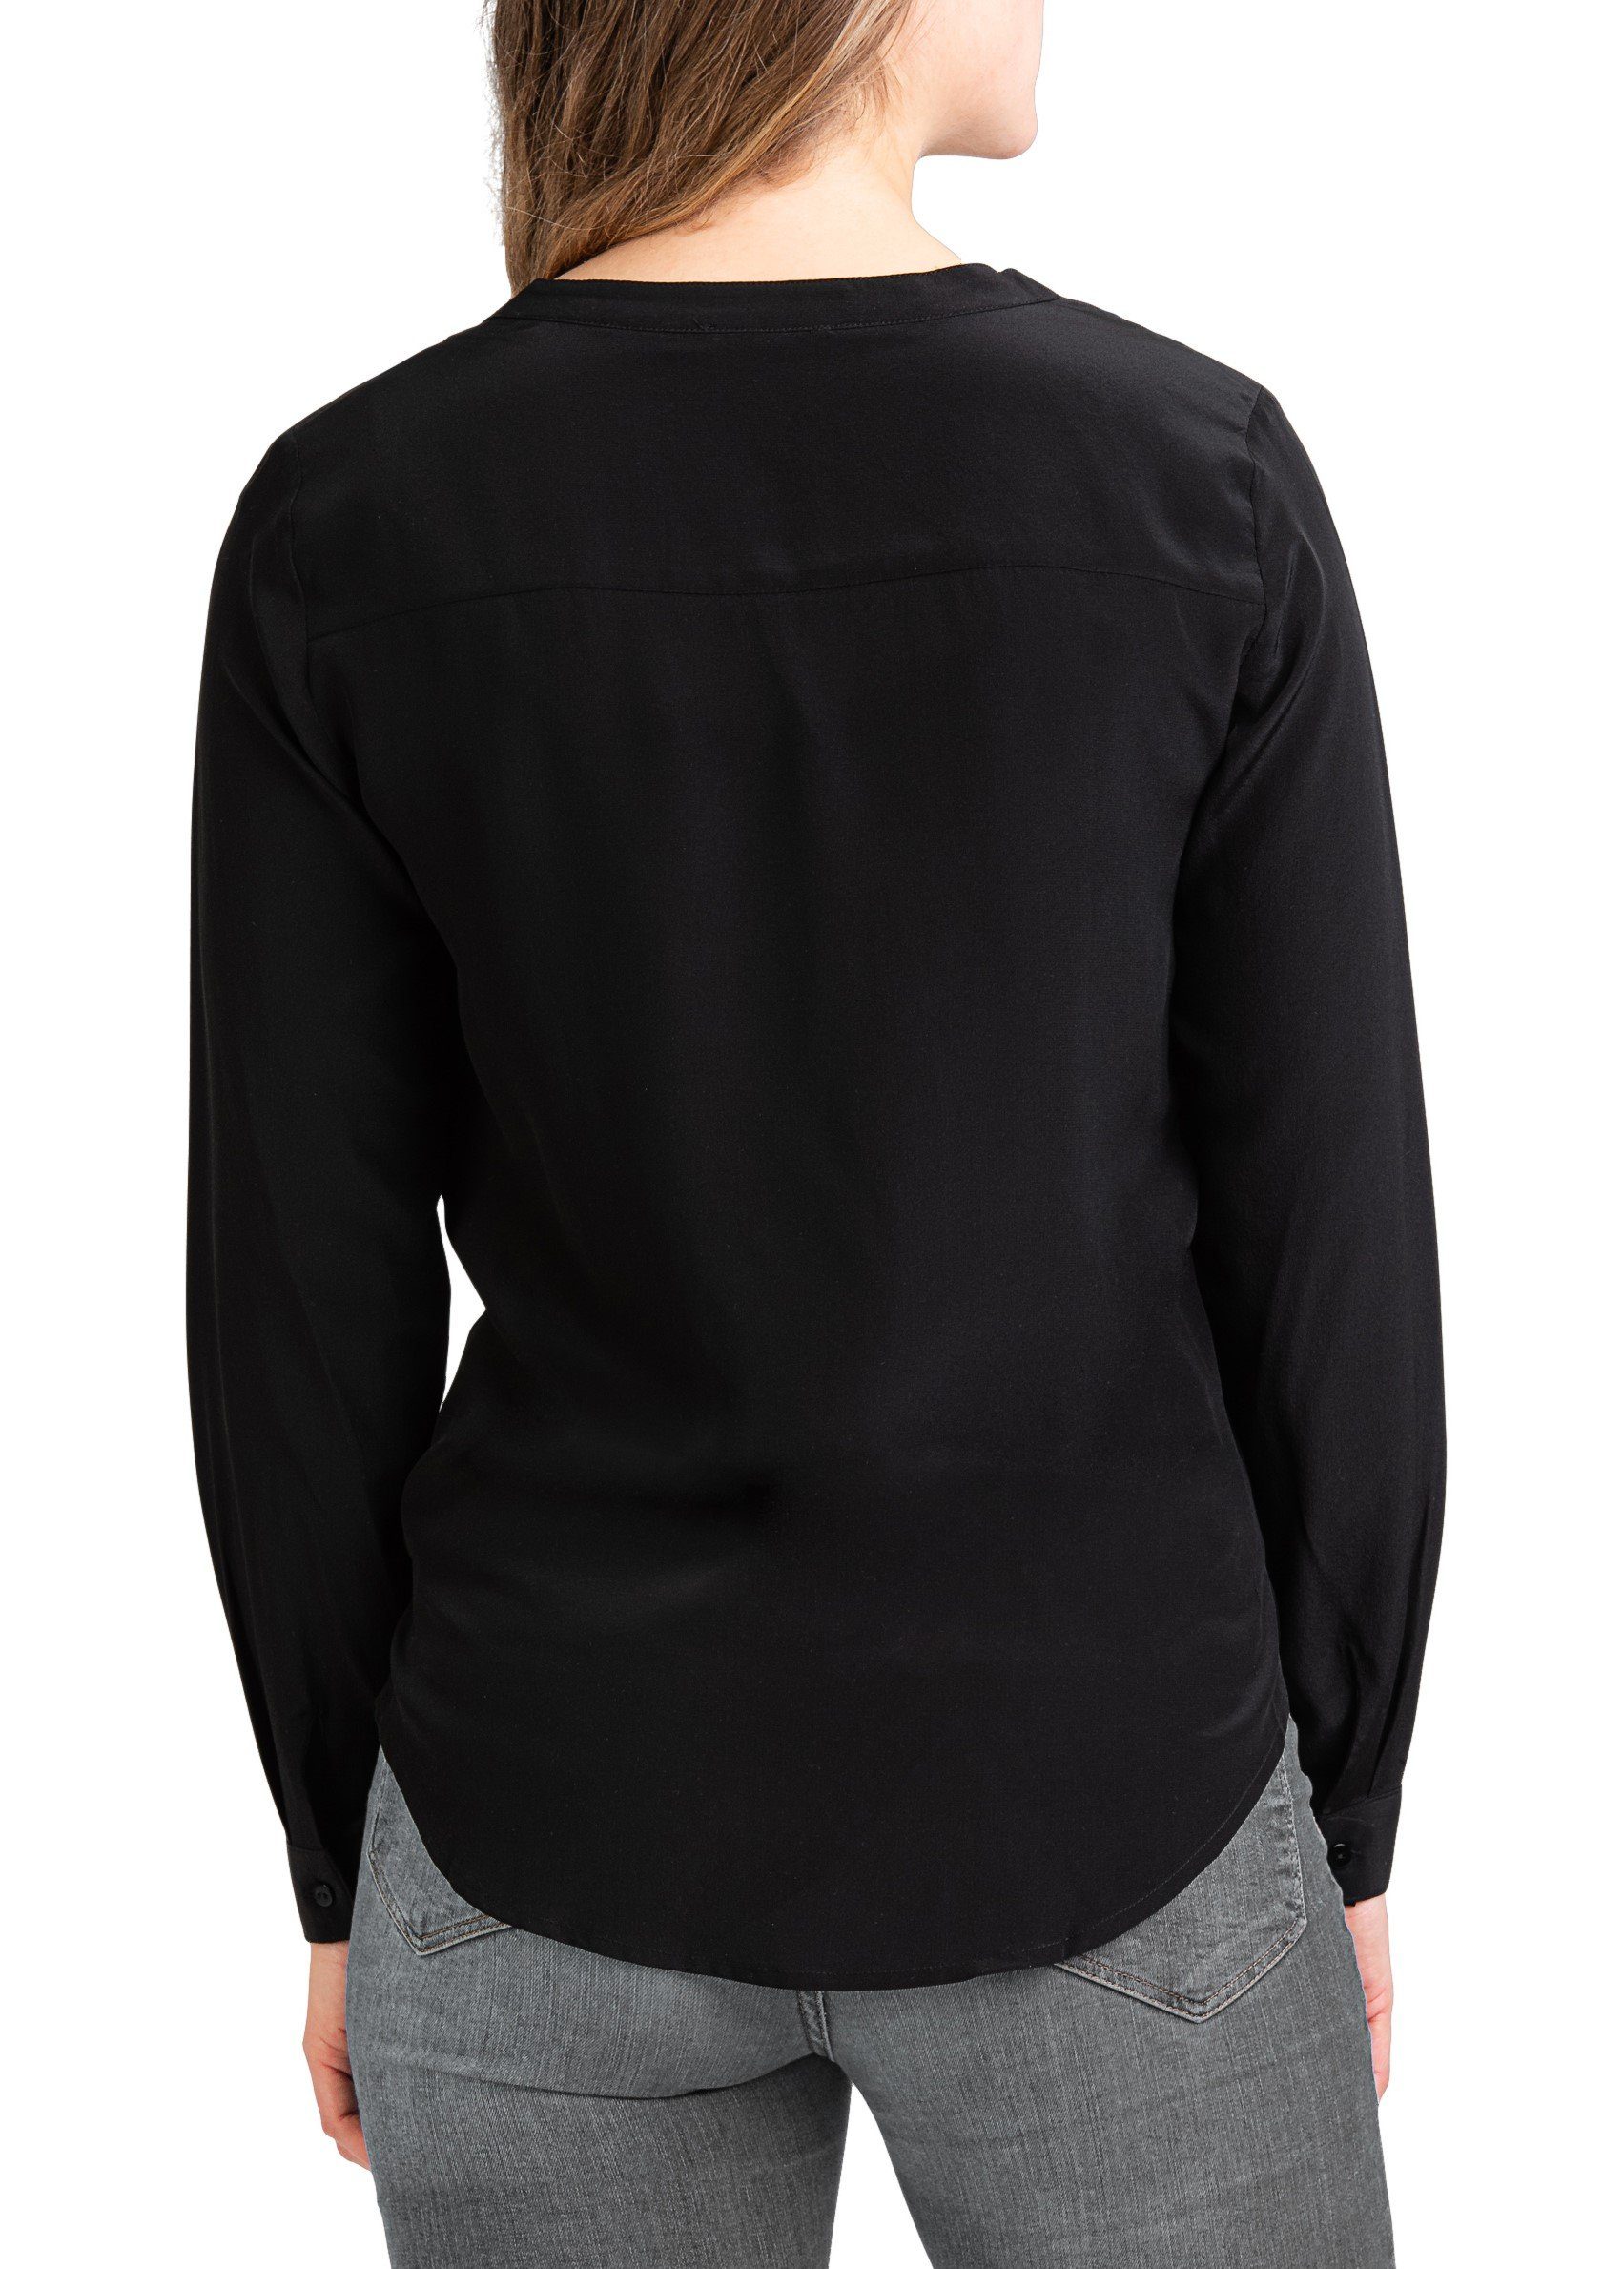 Posh Gear Seidenbluse Damen Seidenbluse Bluse aus 100% Seide schwarz Nobicetta